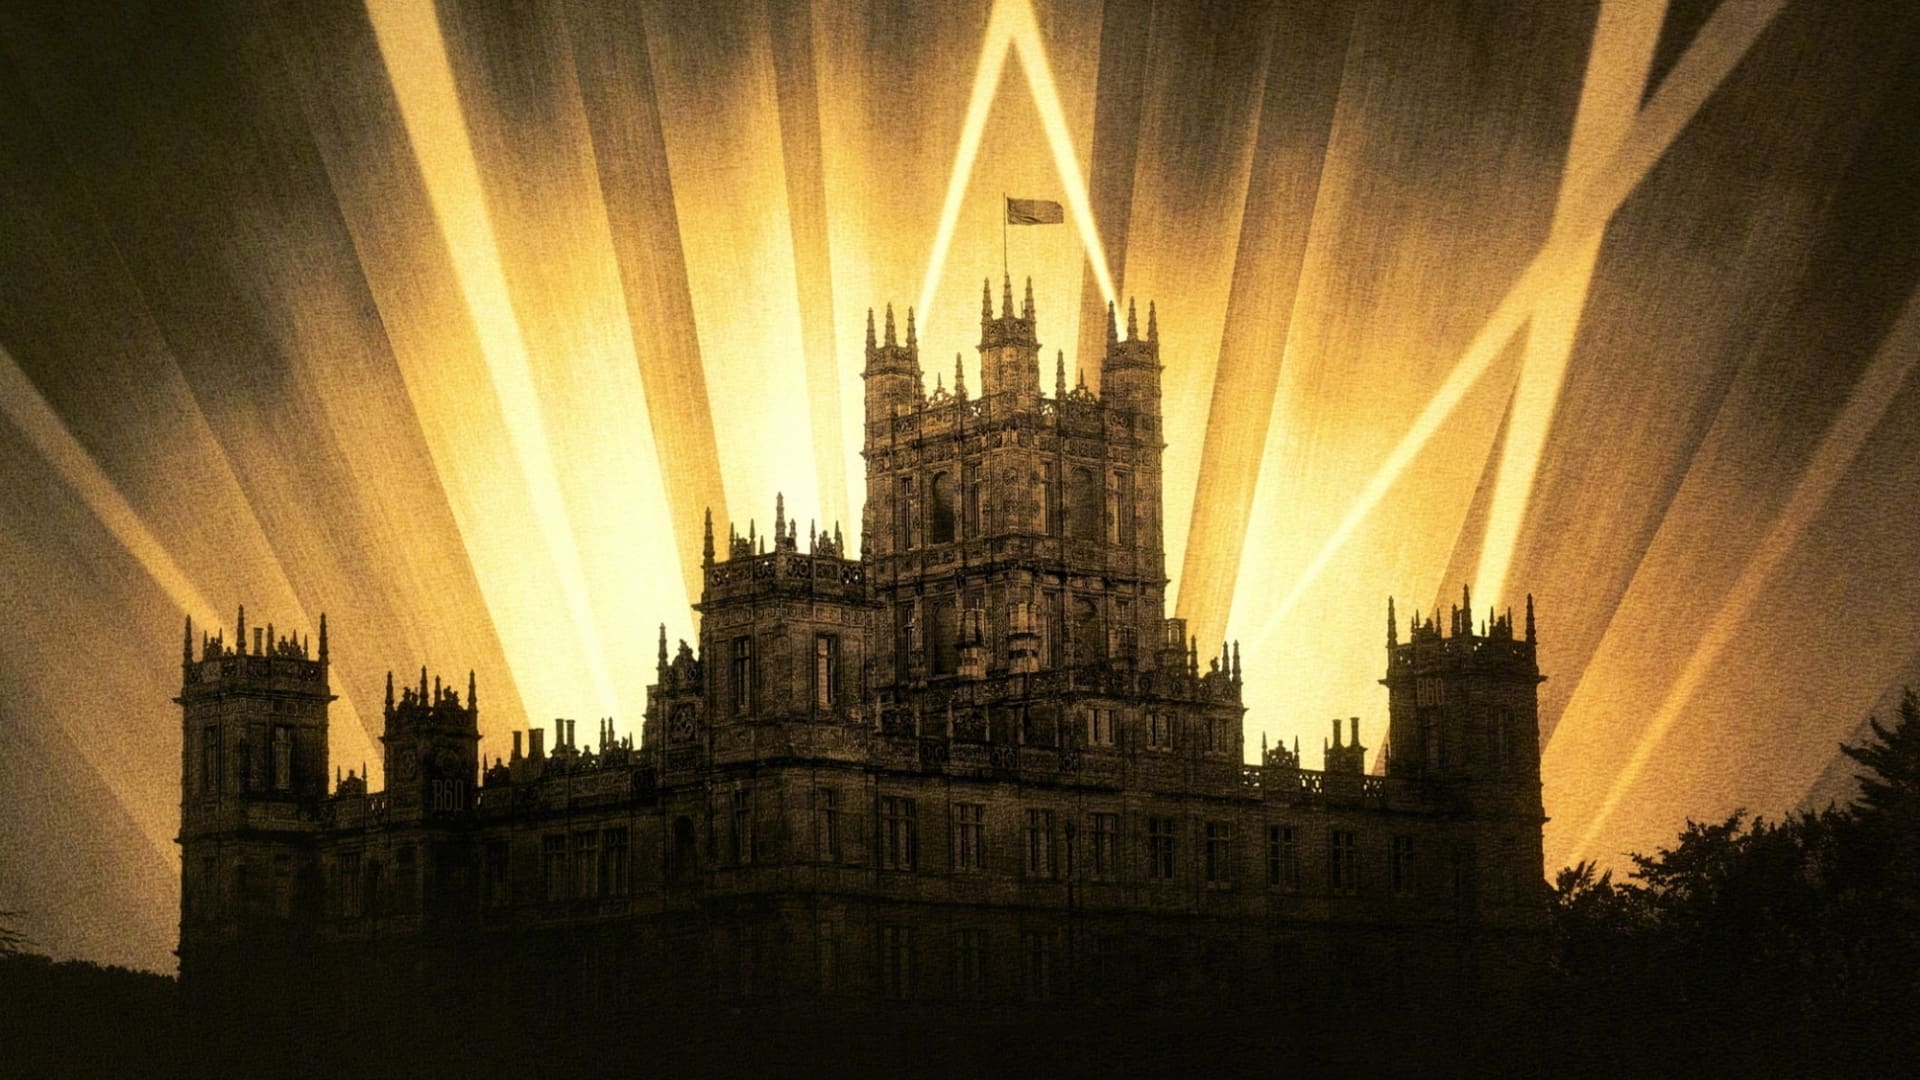 Downton Abbey II - Una nuova era (2022)